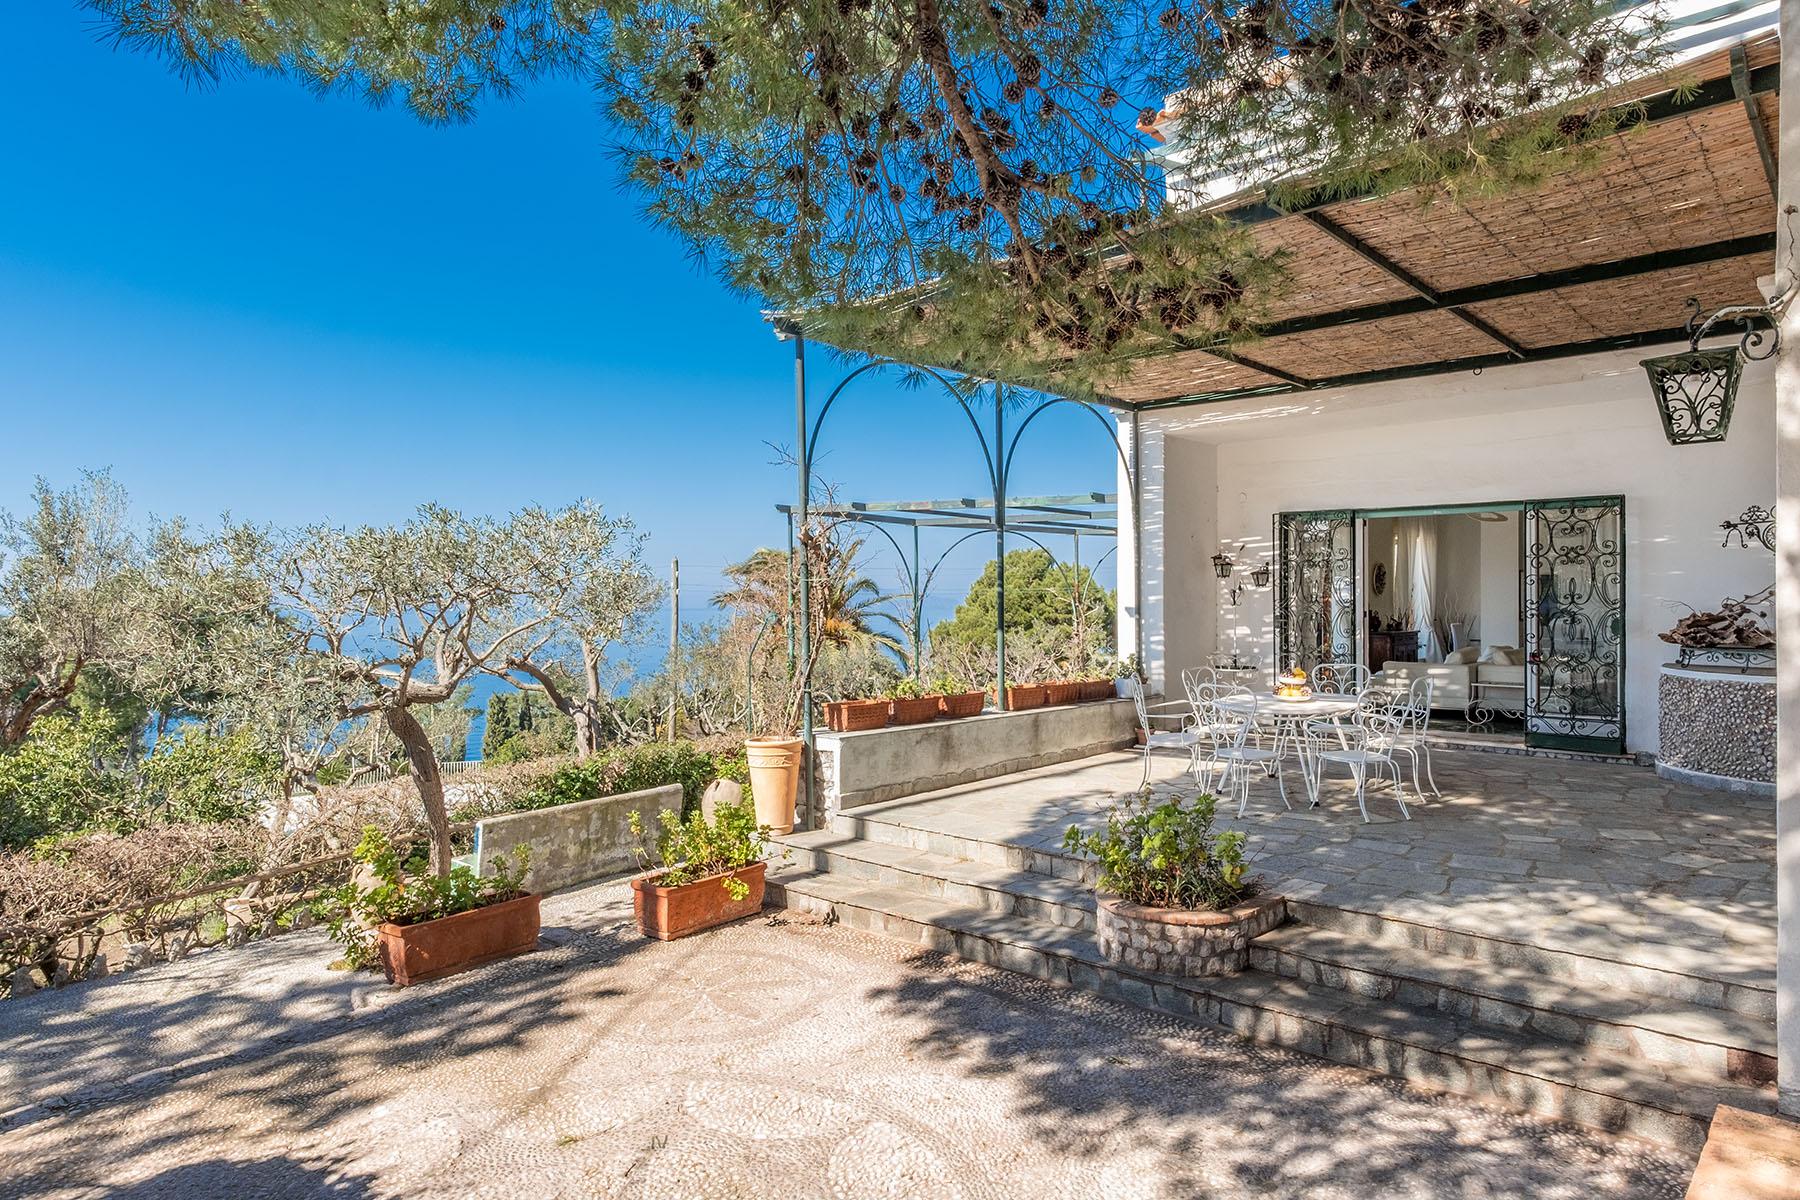 Wonderful villa with garden and seaview in Anacapri - 1